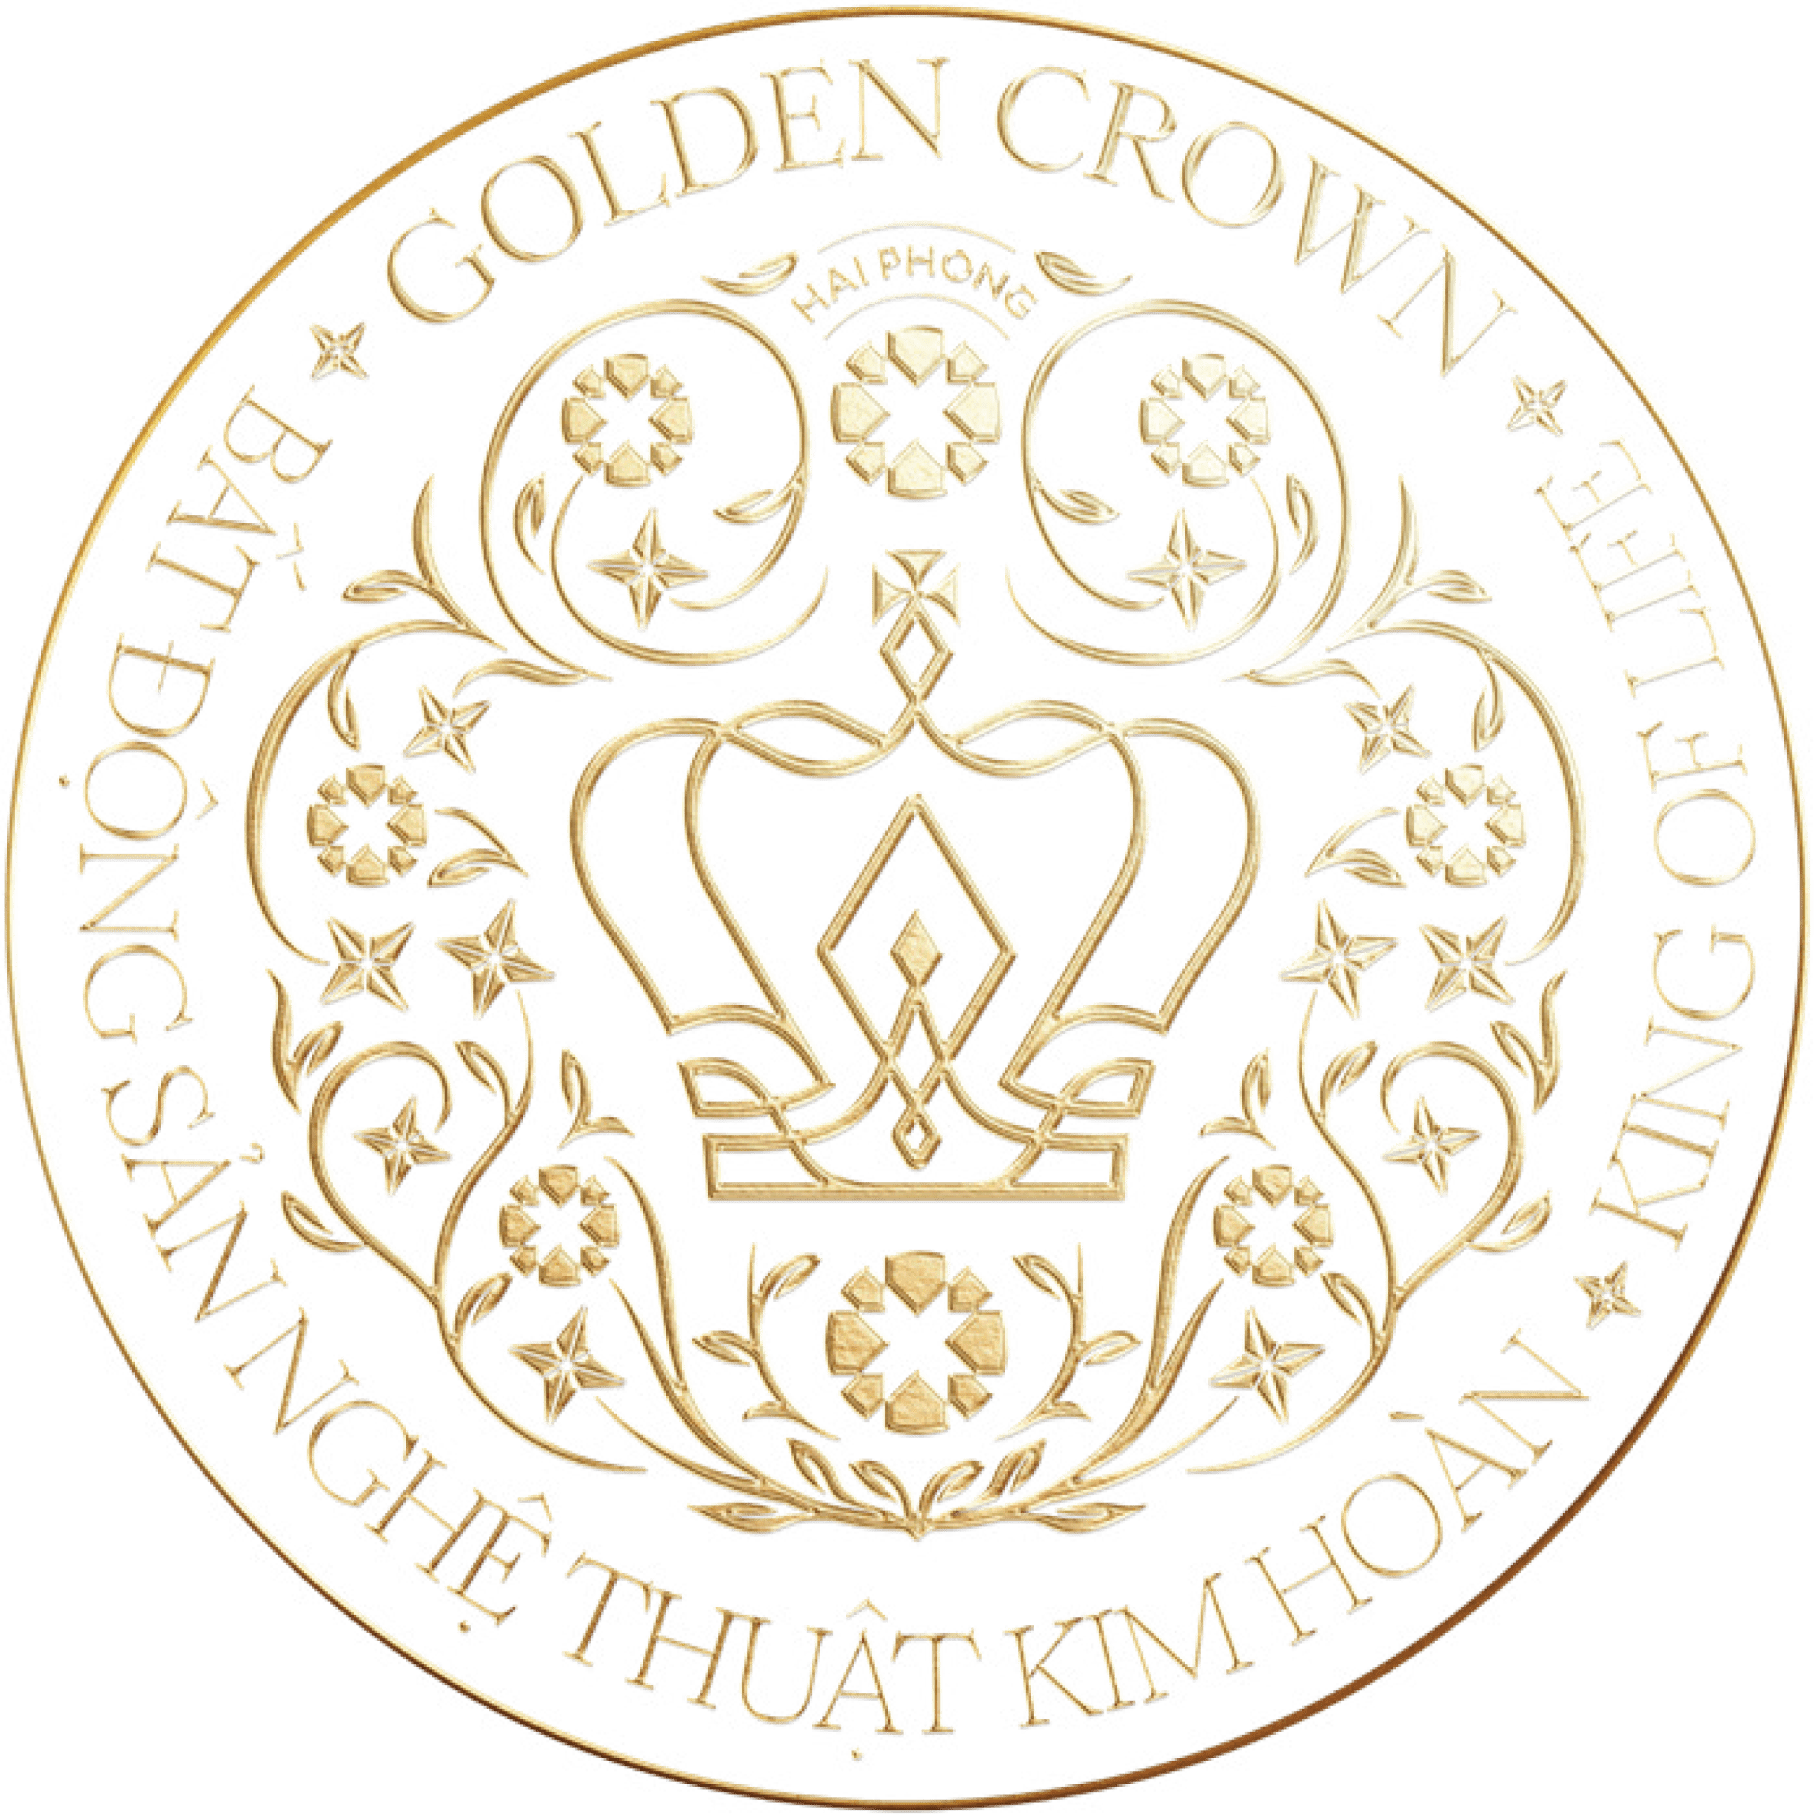 Golden Crown Hải Phòng